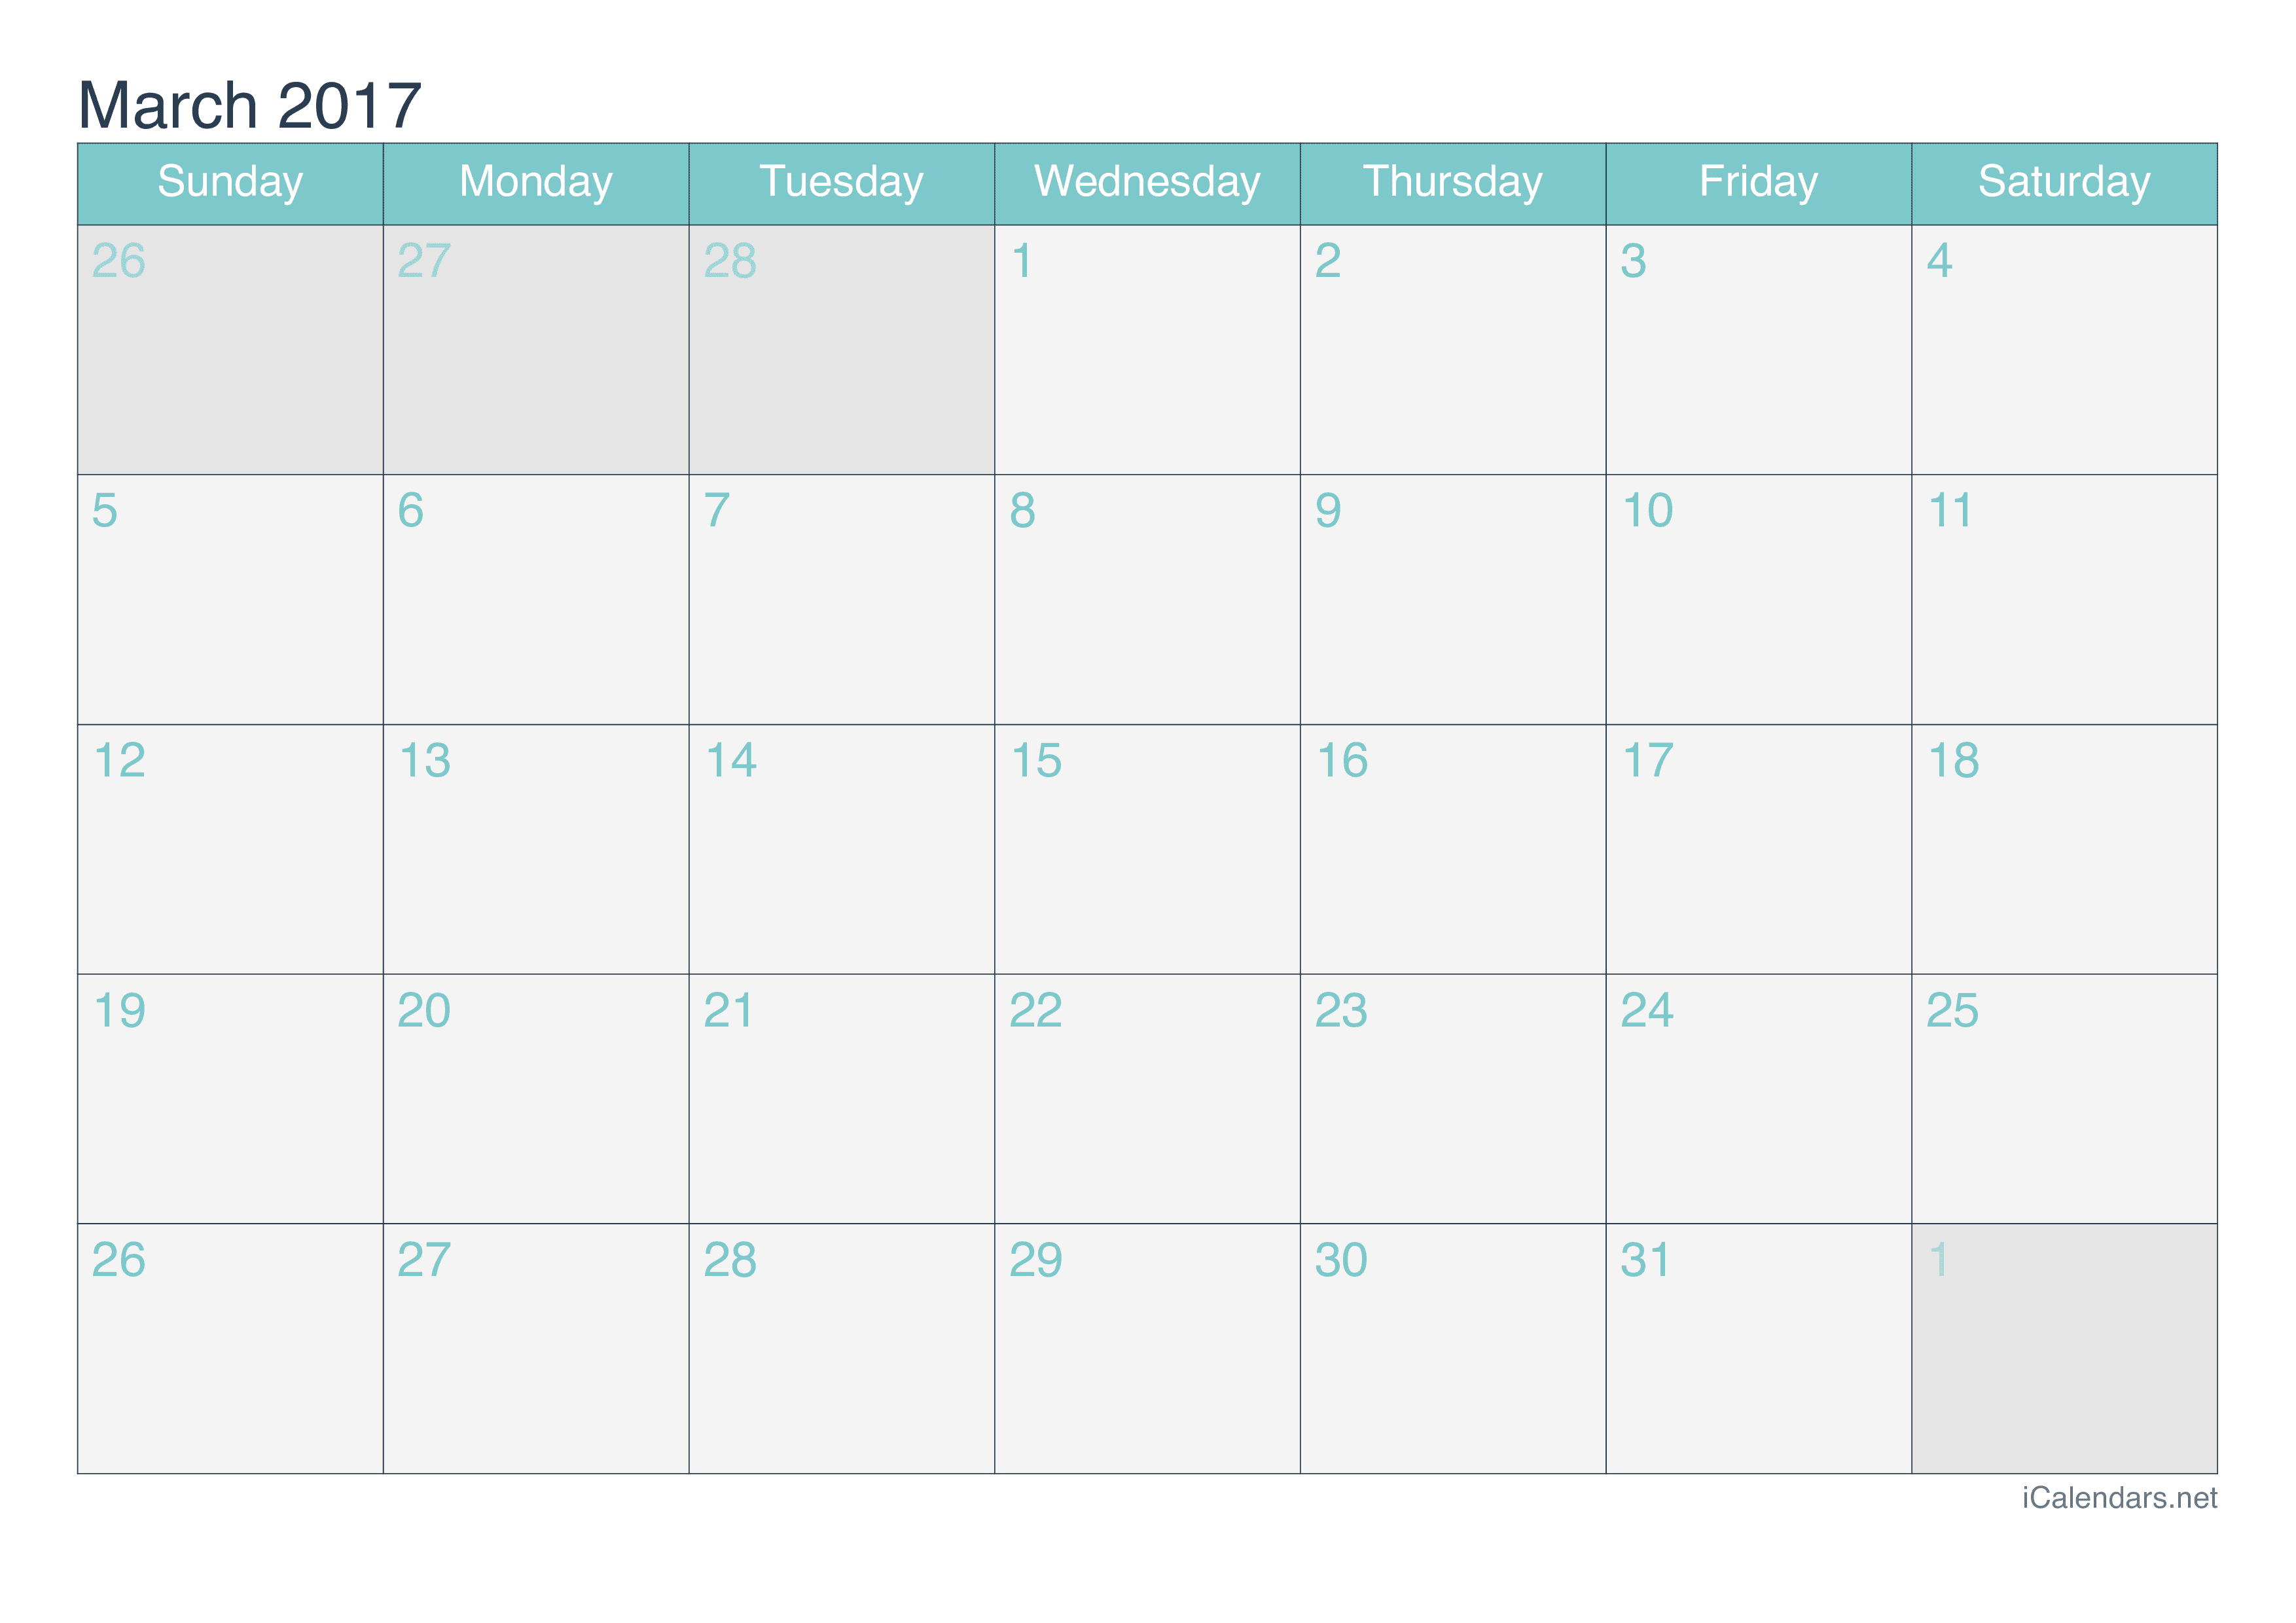 March 2017 Printable Calendar icalendars net